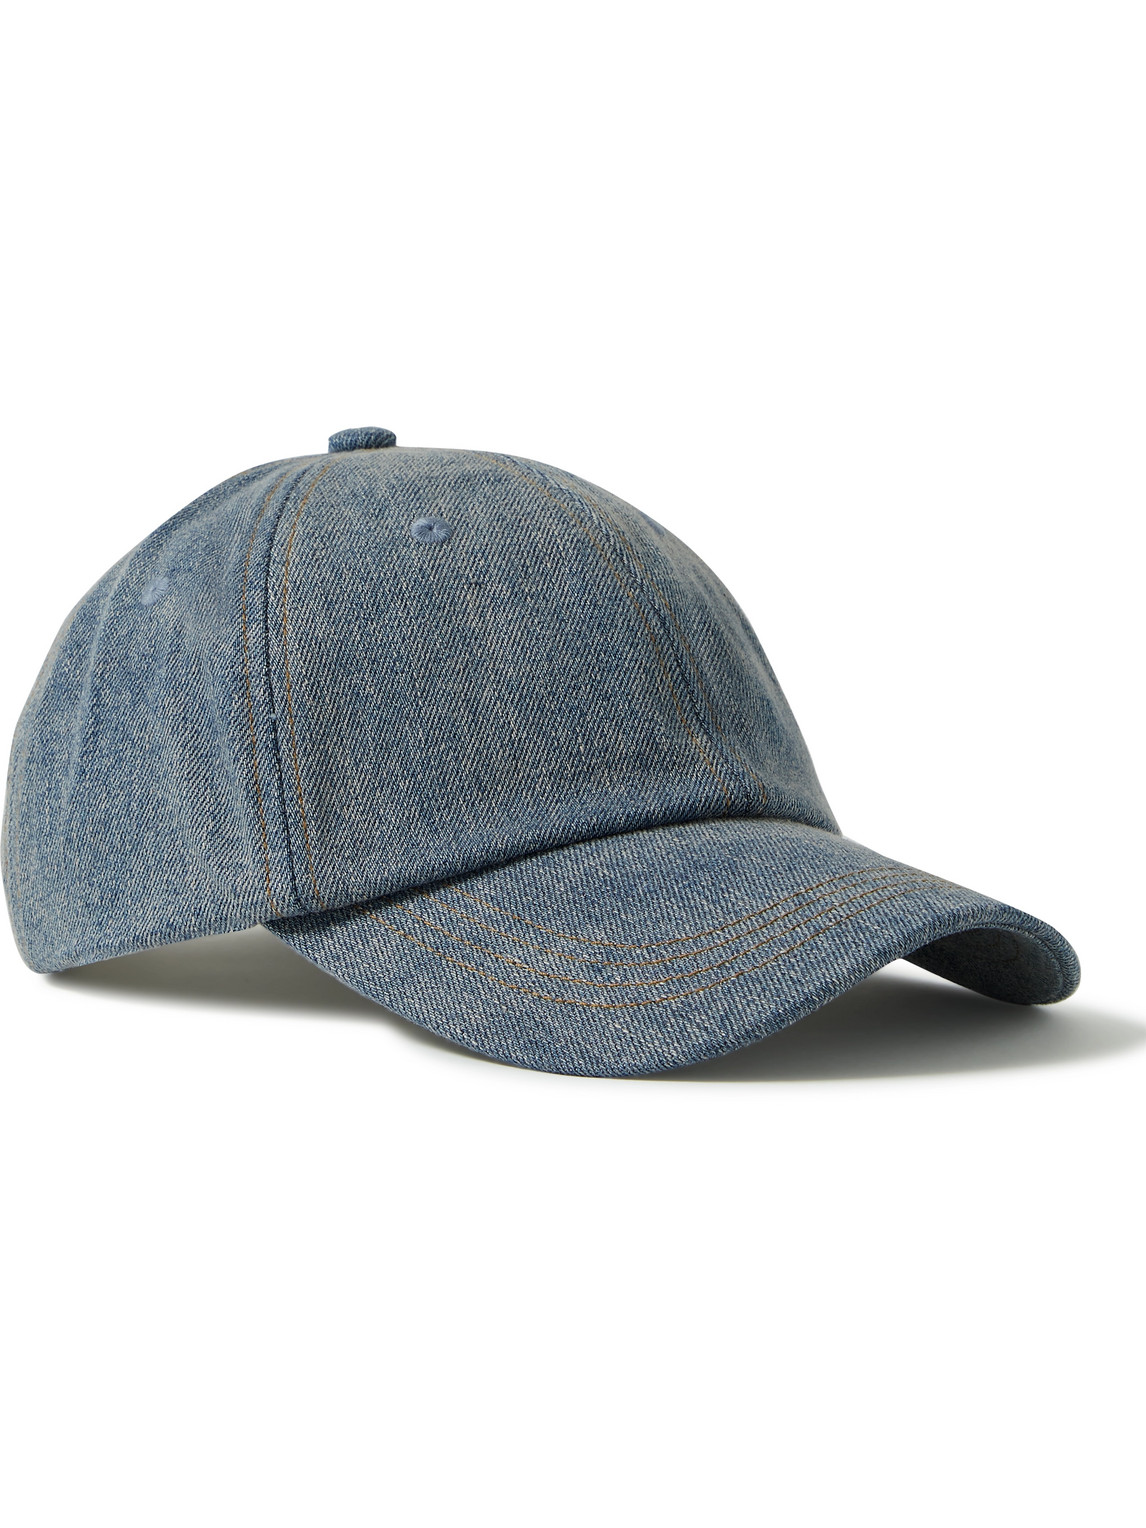 Acne Studios 标贴棒球帽 In Mid Blue